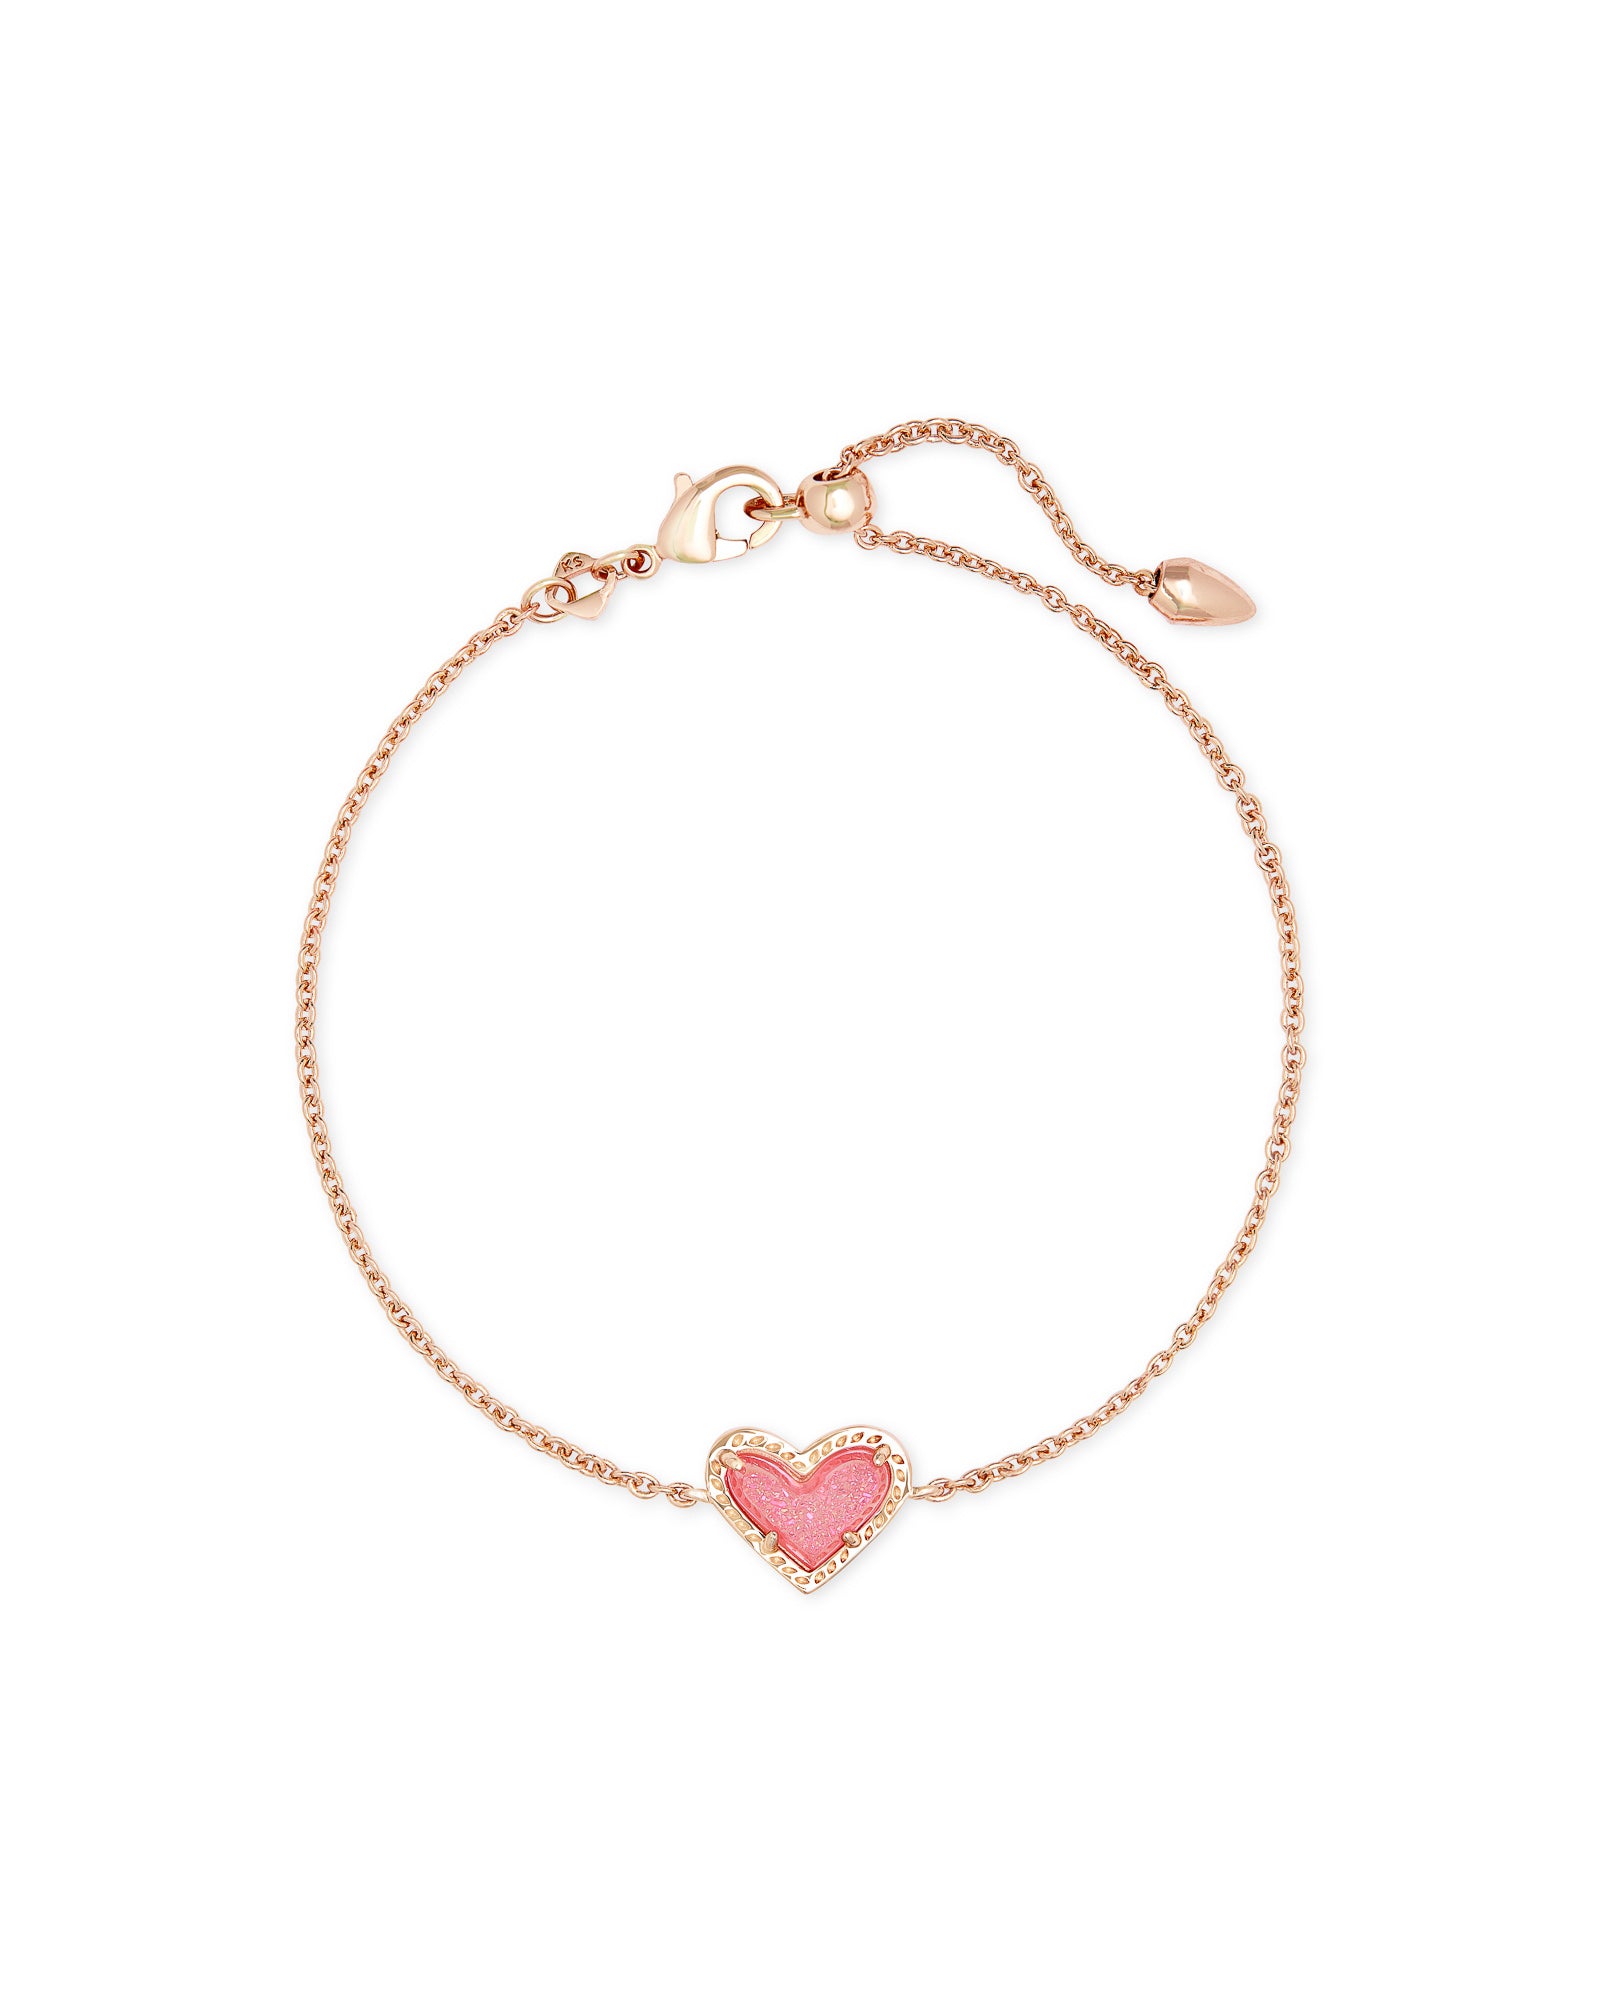 Ari Heart Bracelet in RoseGold Pink Drusy